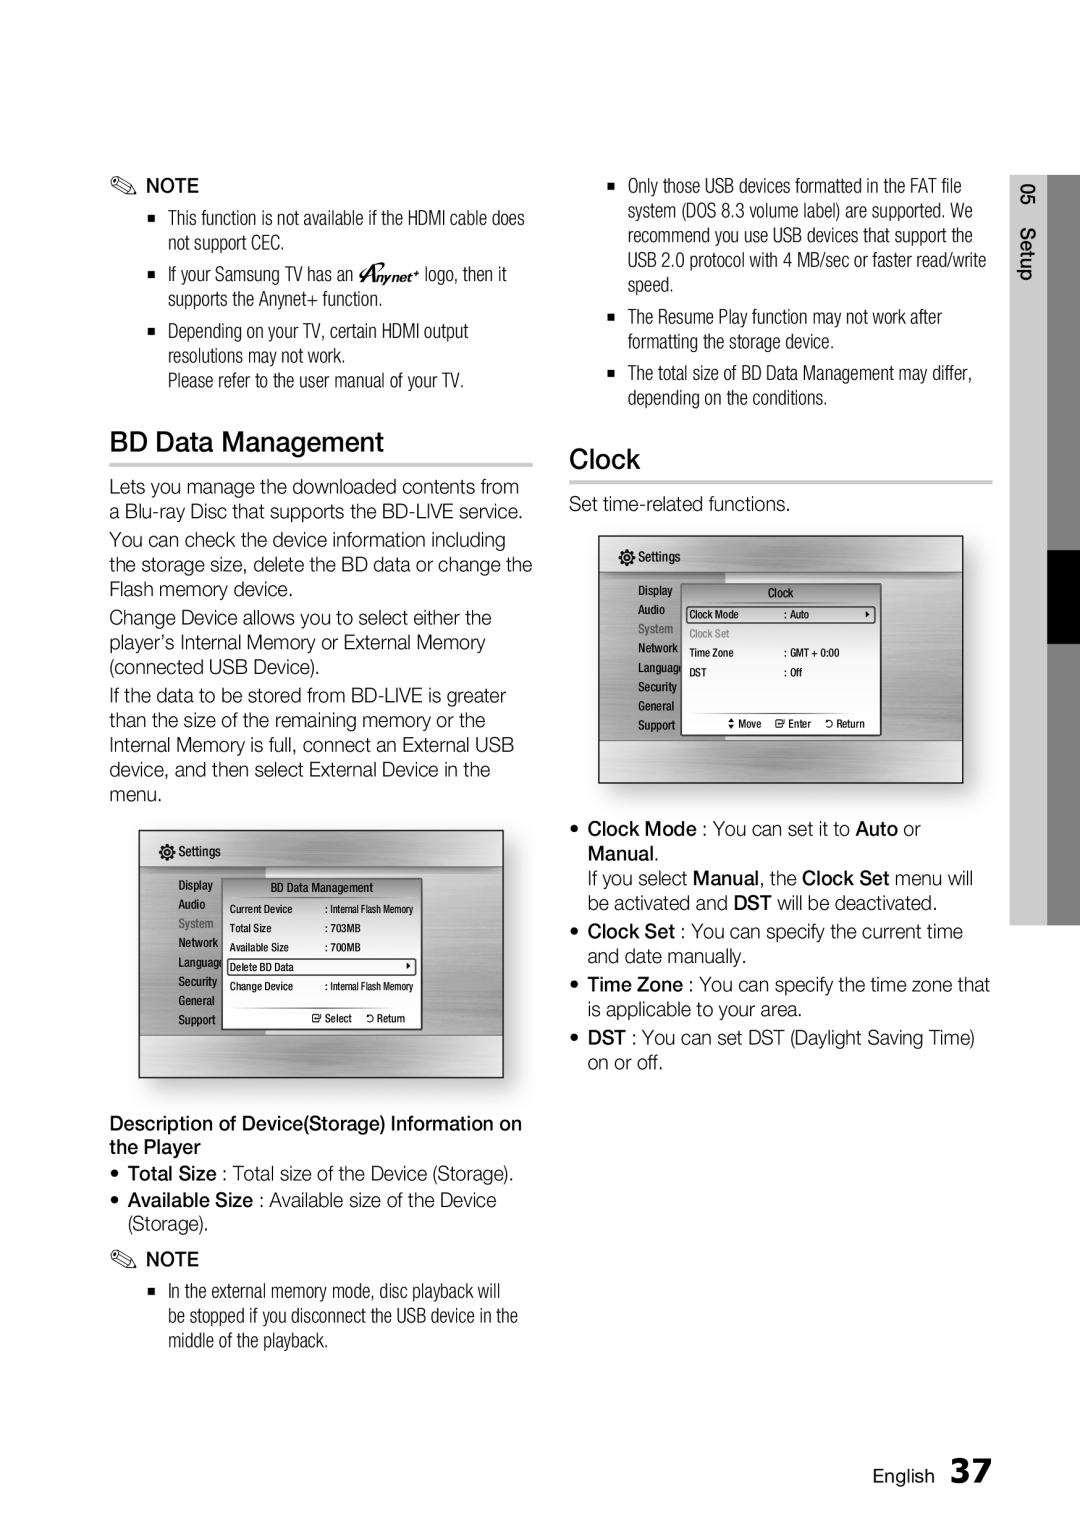 Samsung BD-C7500/EDC, BD-C7500/XEN, BD-C7500/XEF, BD-C7500/XAA, BD-C7500/XEE manual BD Data Management, Clock 